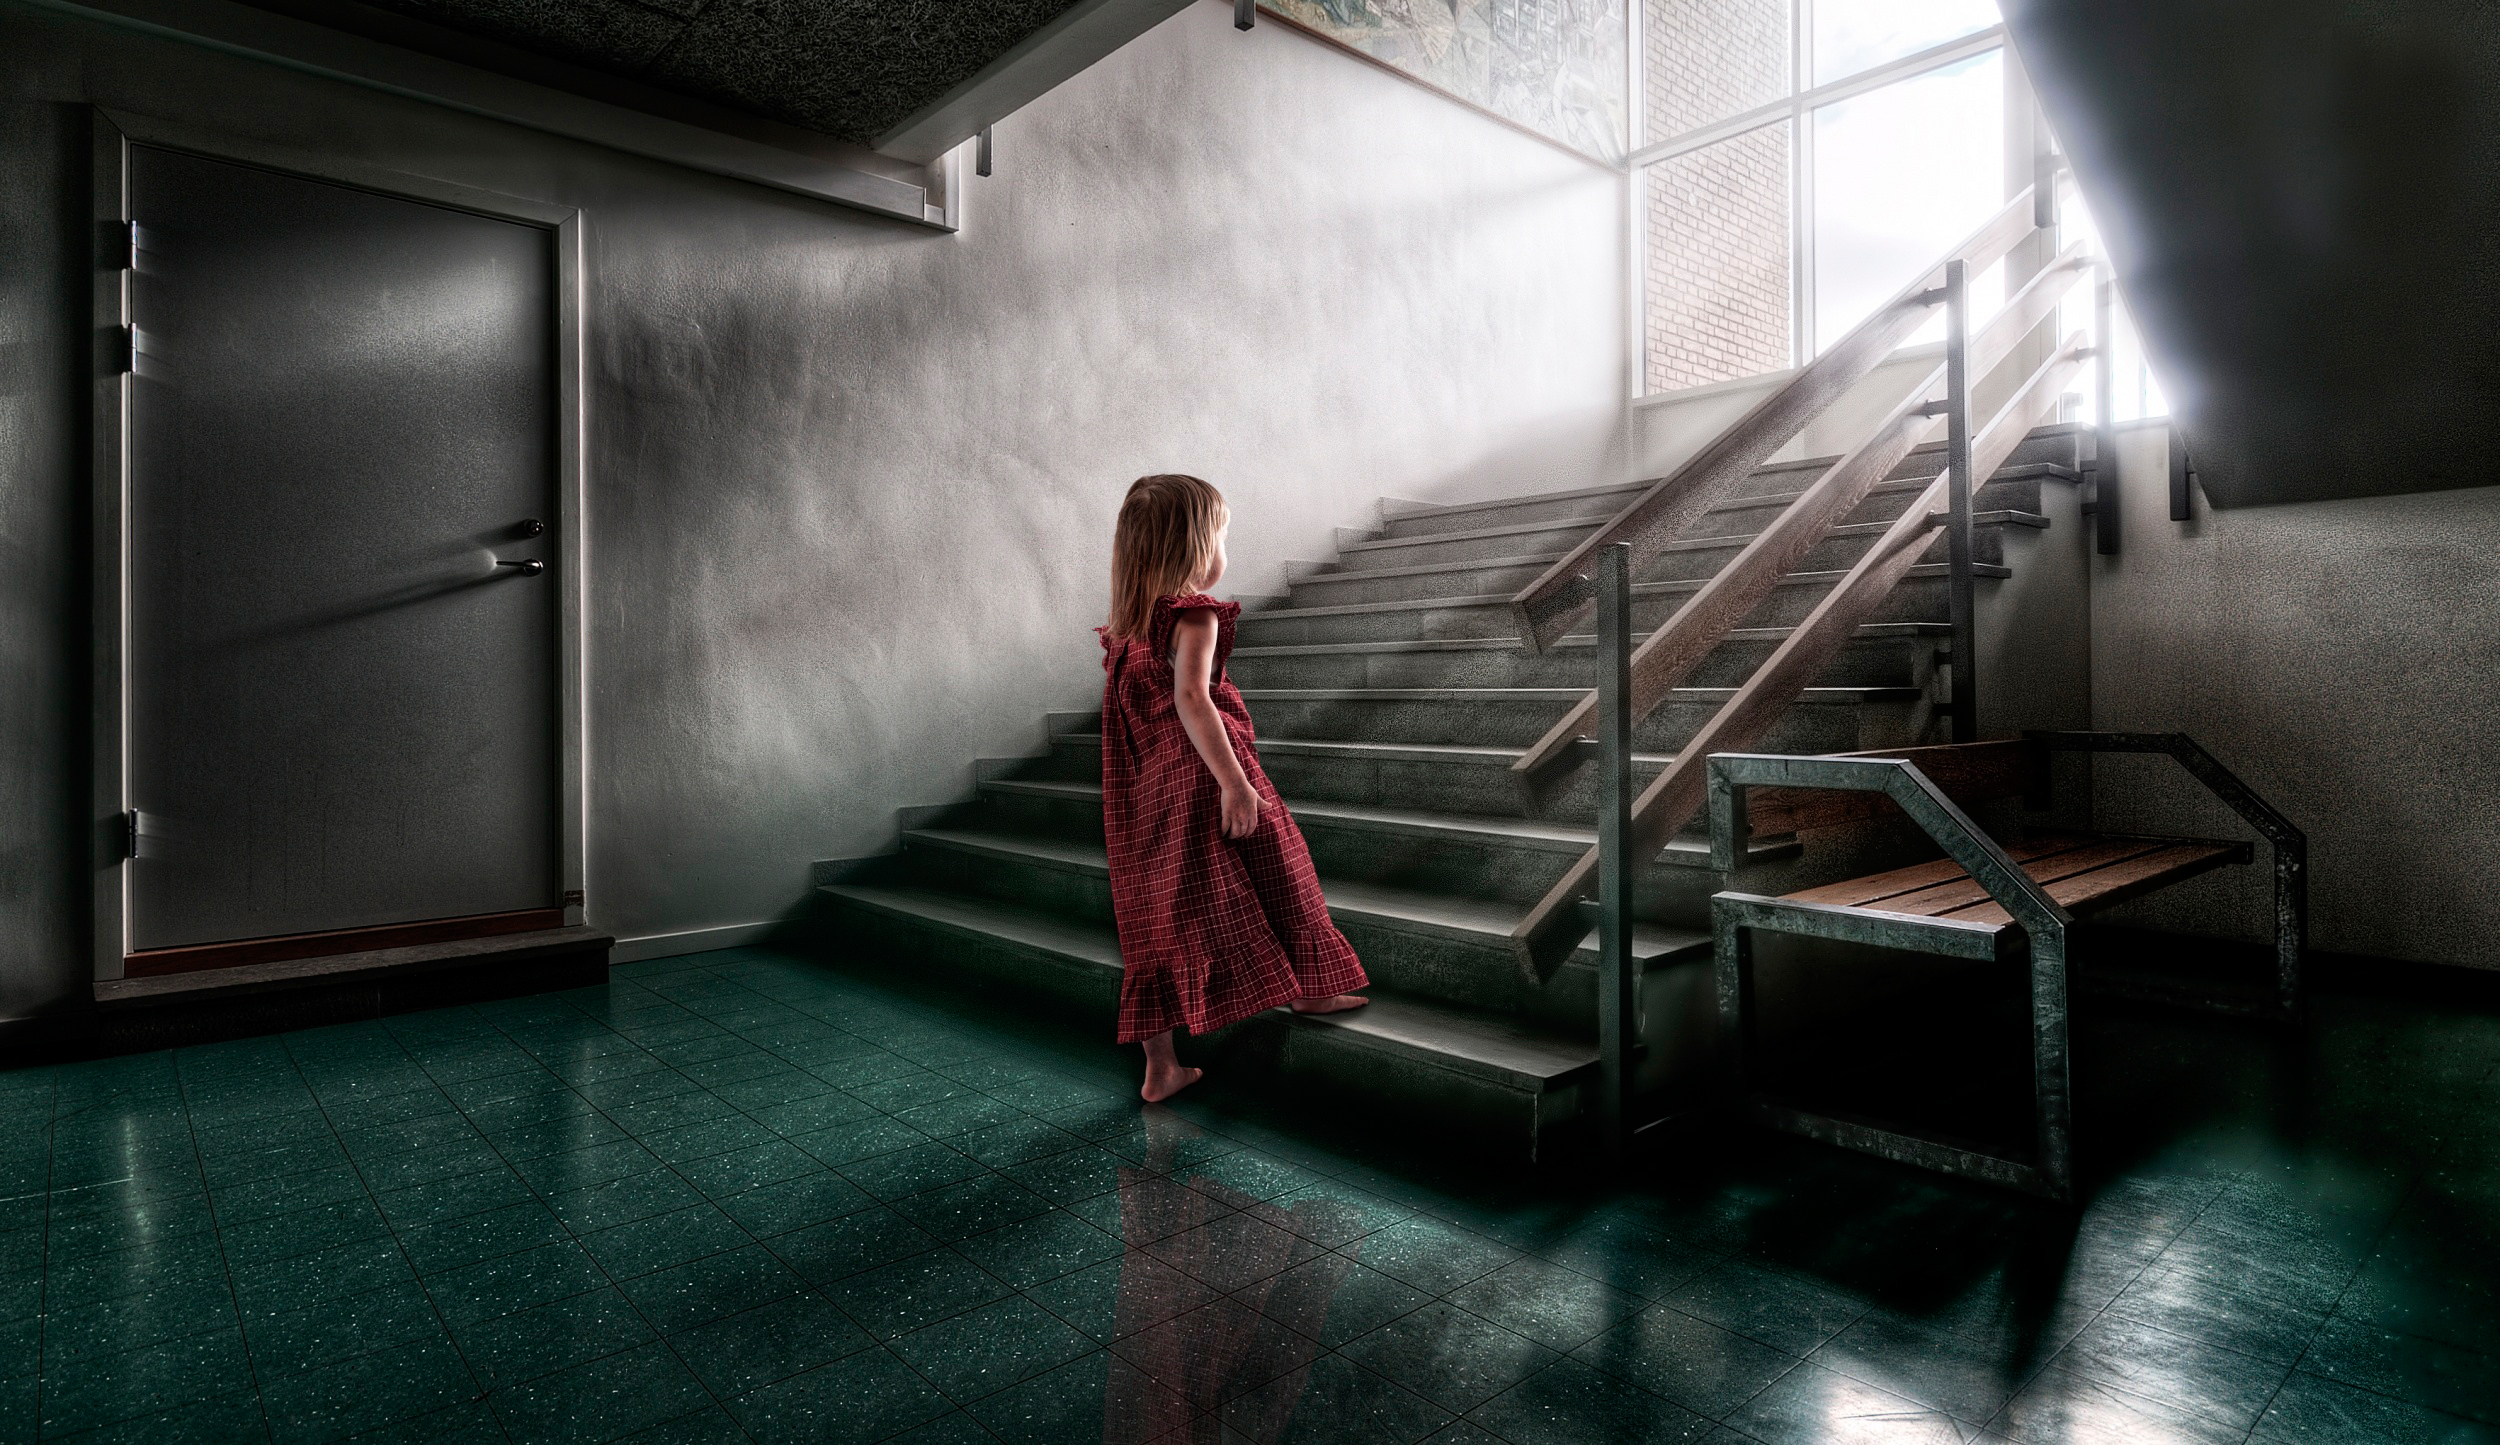 Текст из коридора по деревянной лестнице дети. Фотосессия на лестнице. Девочка на лестнице. Девушка на лестнице. Фотосессия в подъезде на лестнице.